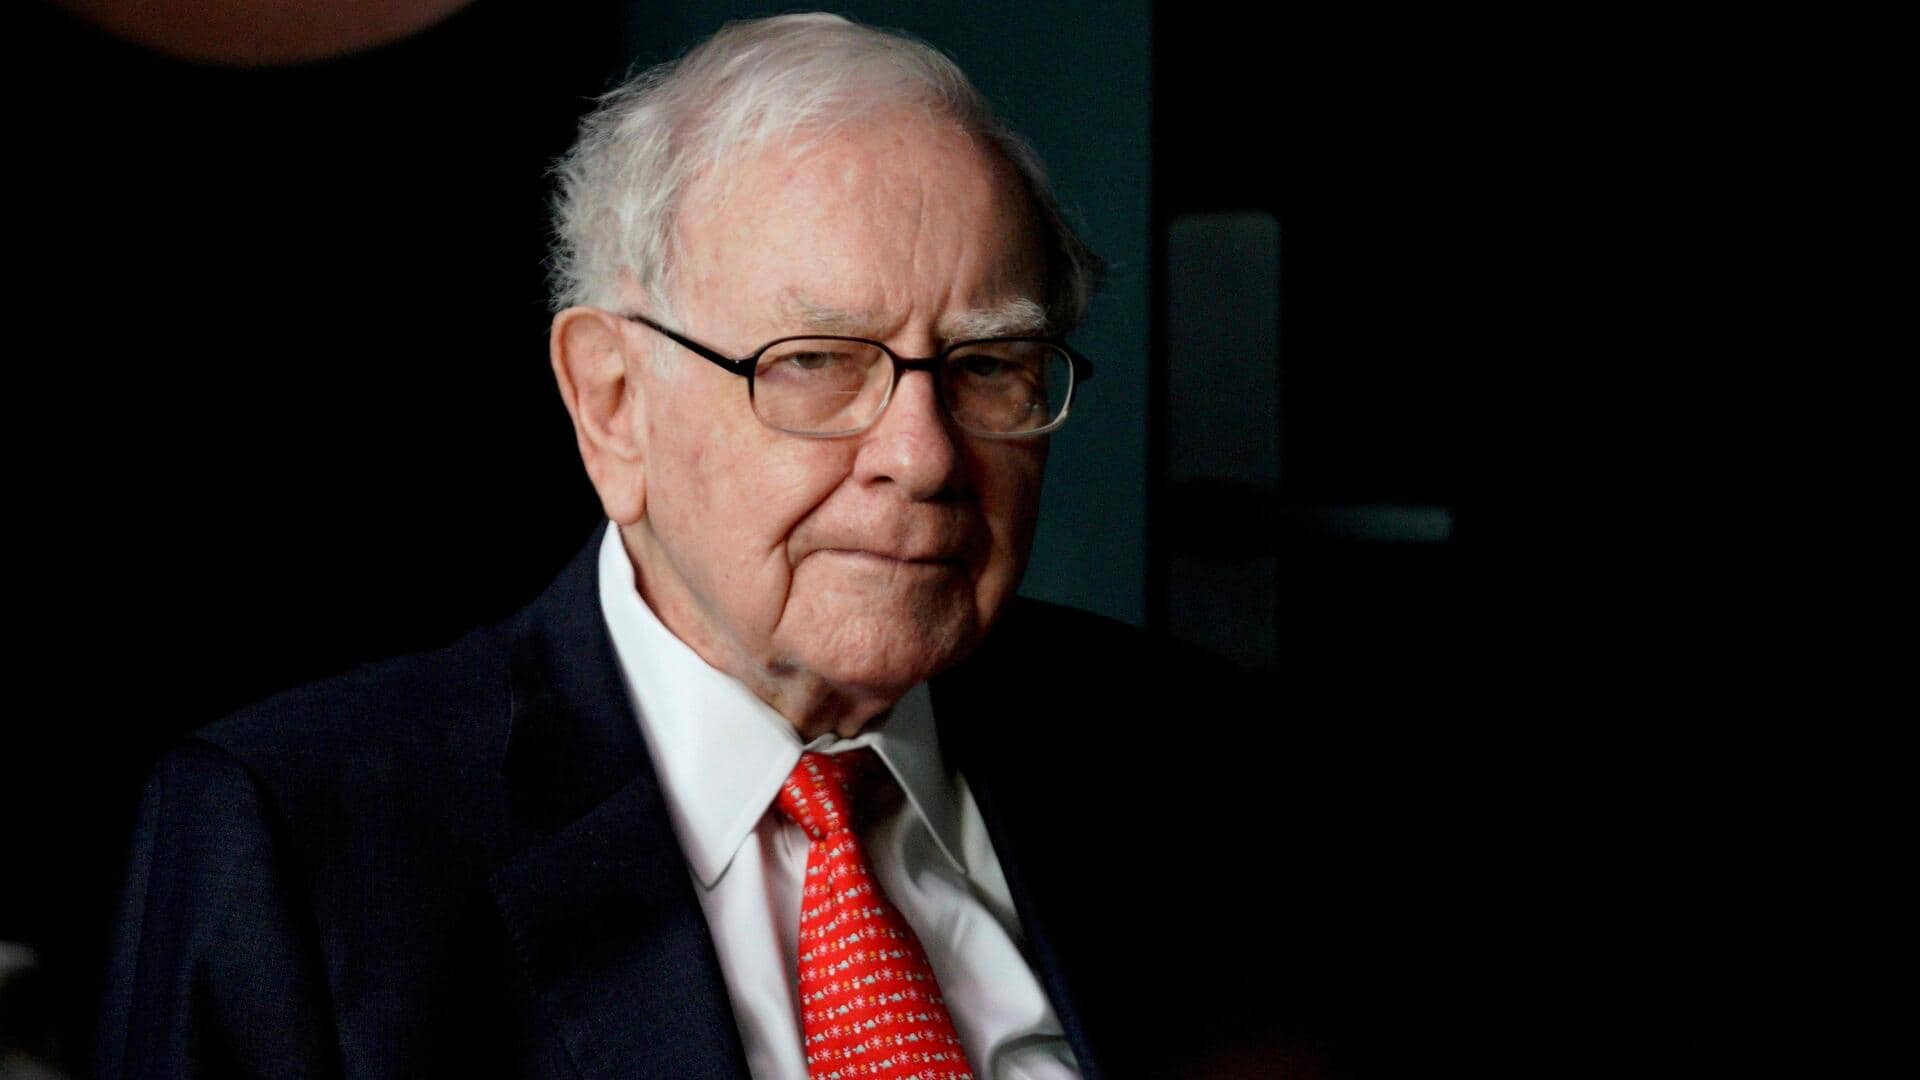 Warren Buffett surpasses Larry Page, becomes world's 6th richest person